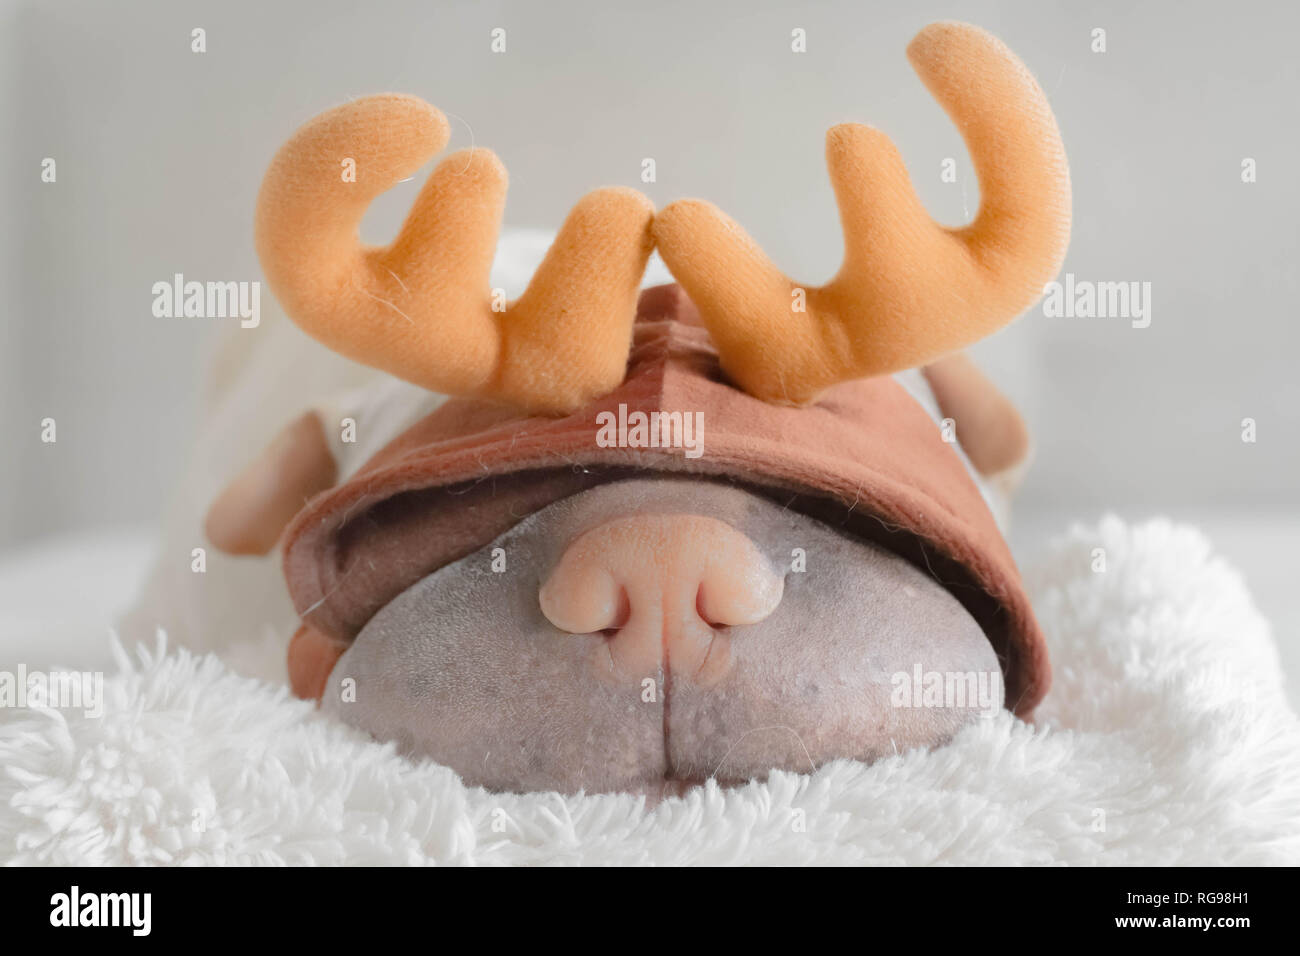 Shar pei dog wearing a reindeer hat Stock Photo